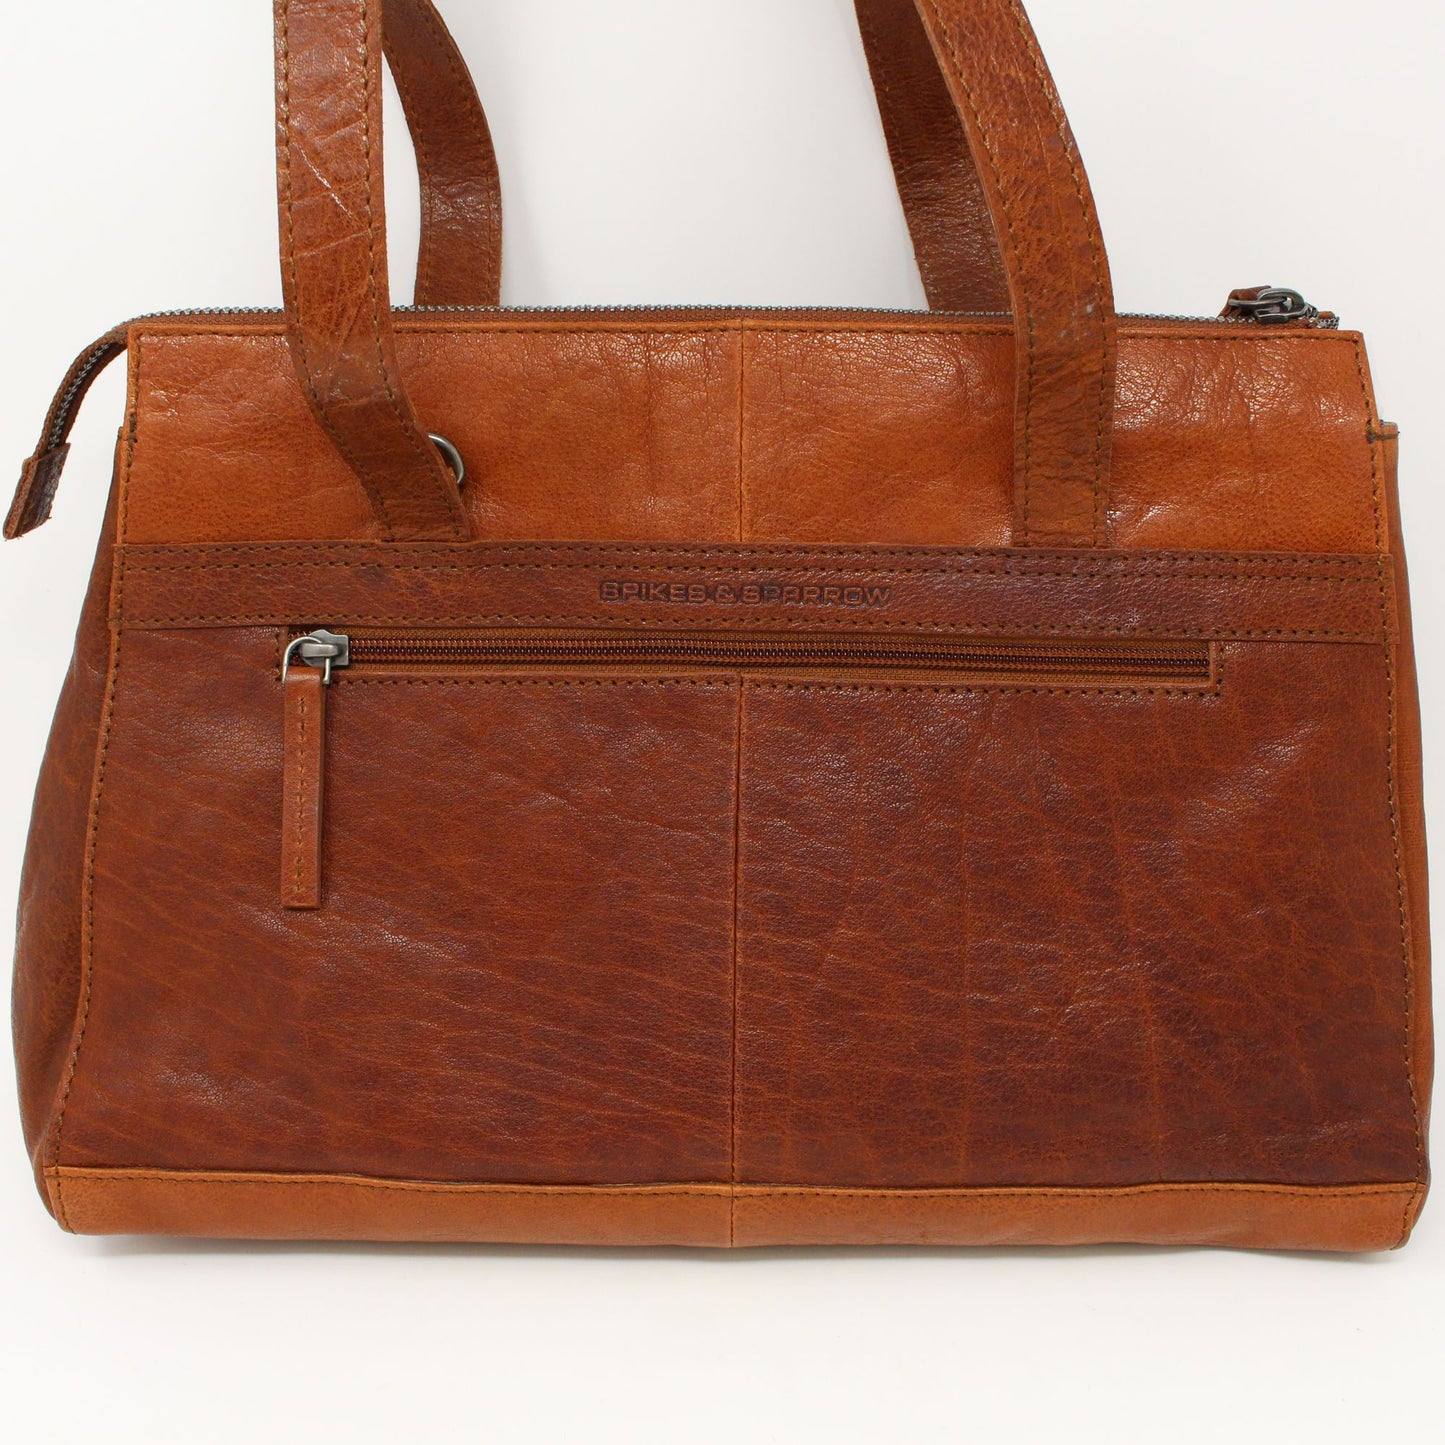 Spikes & Sparrow Leather Shopper Bag in Brandy SPK-1239